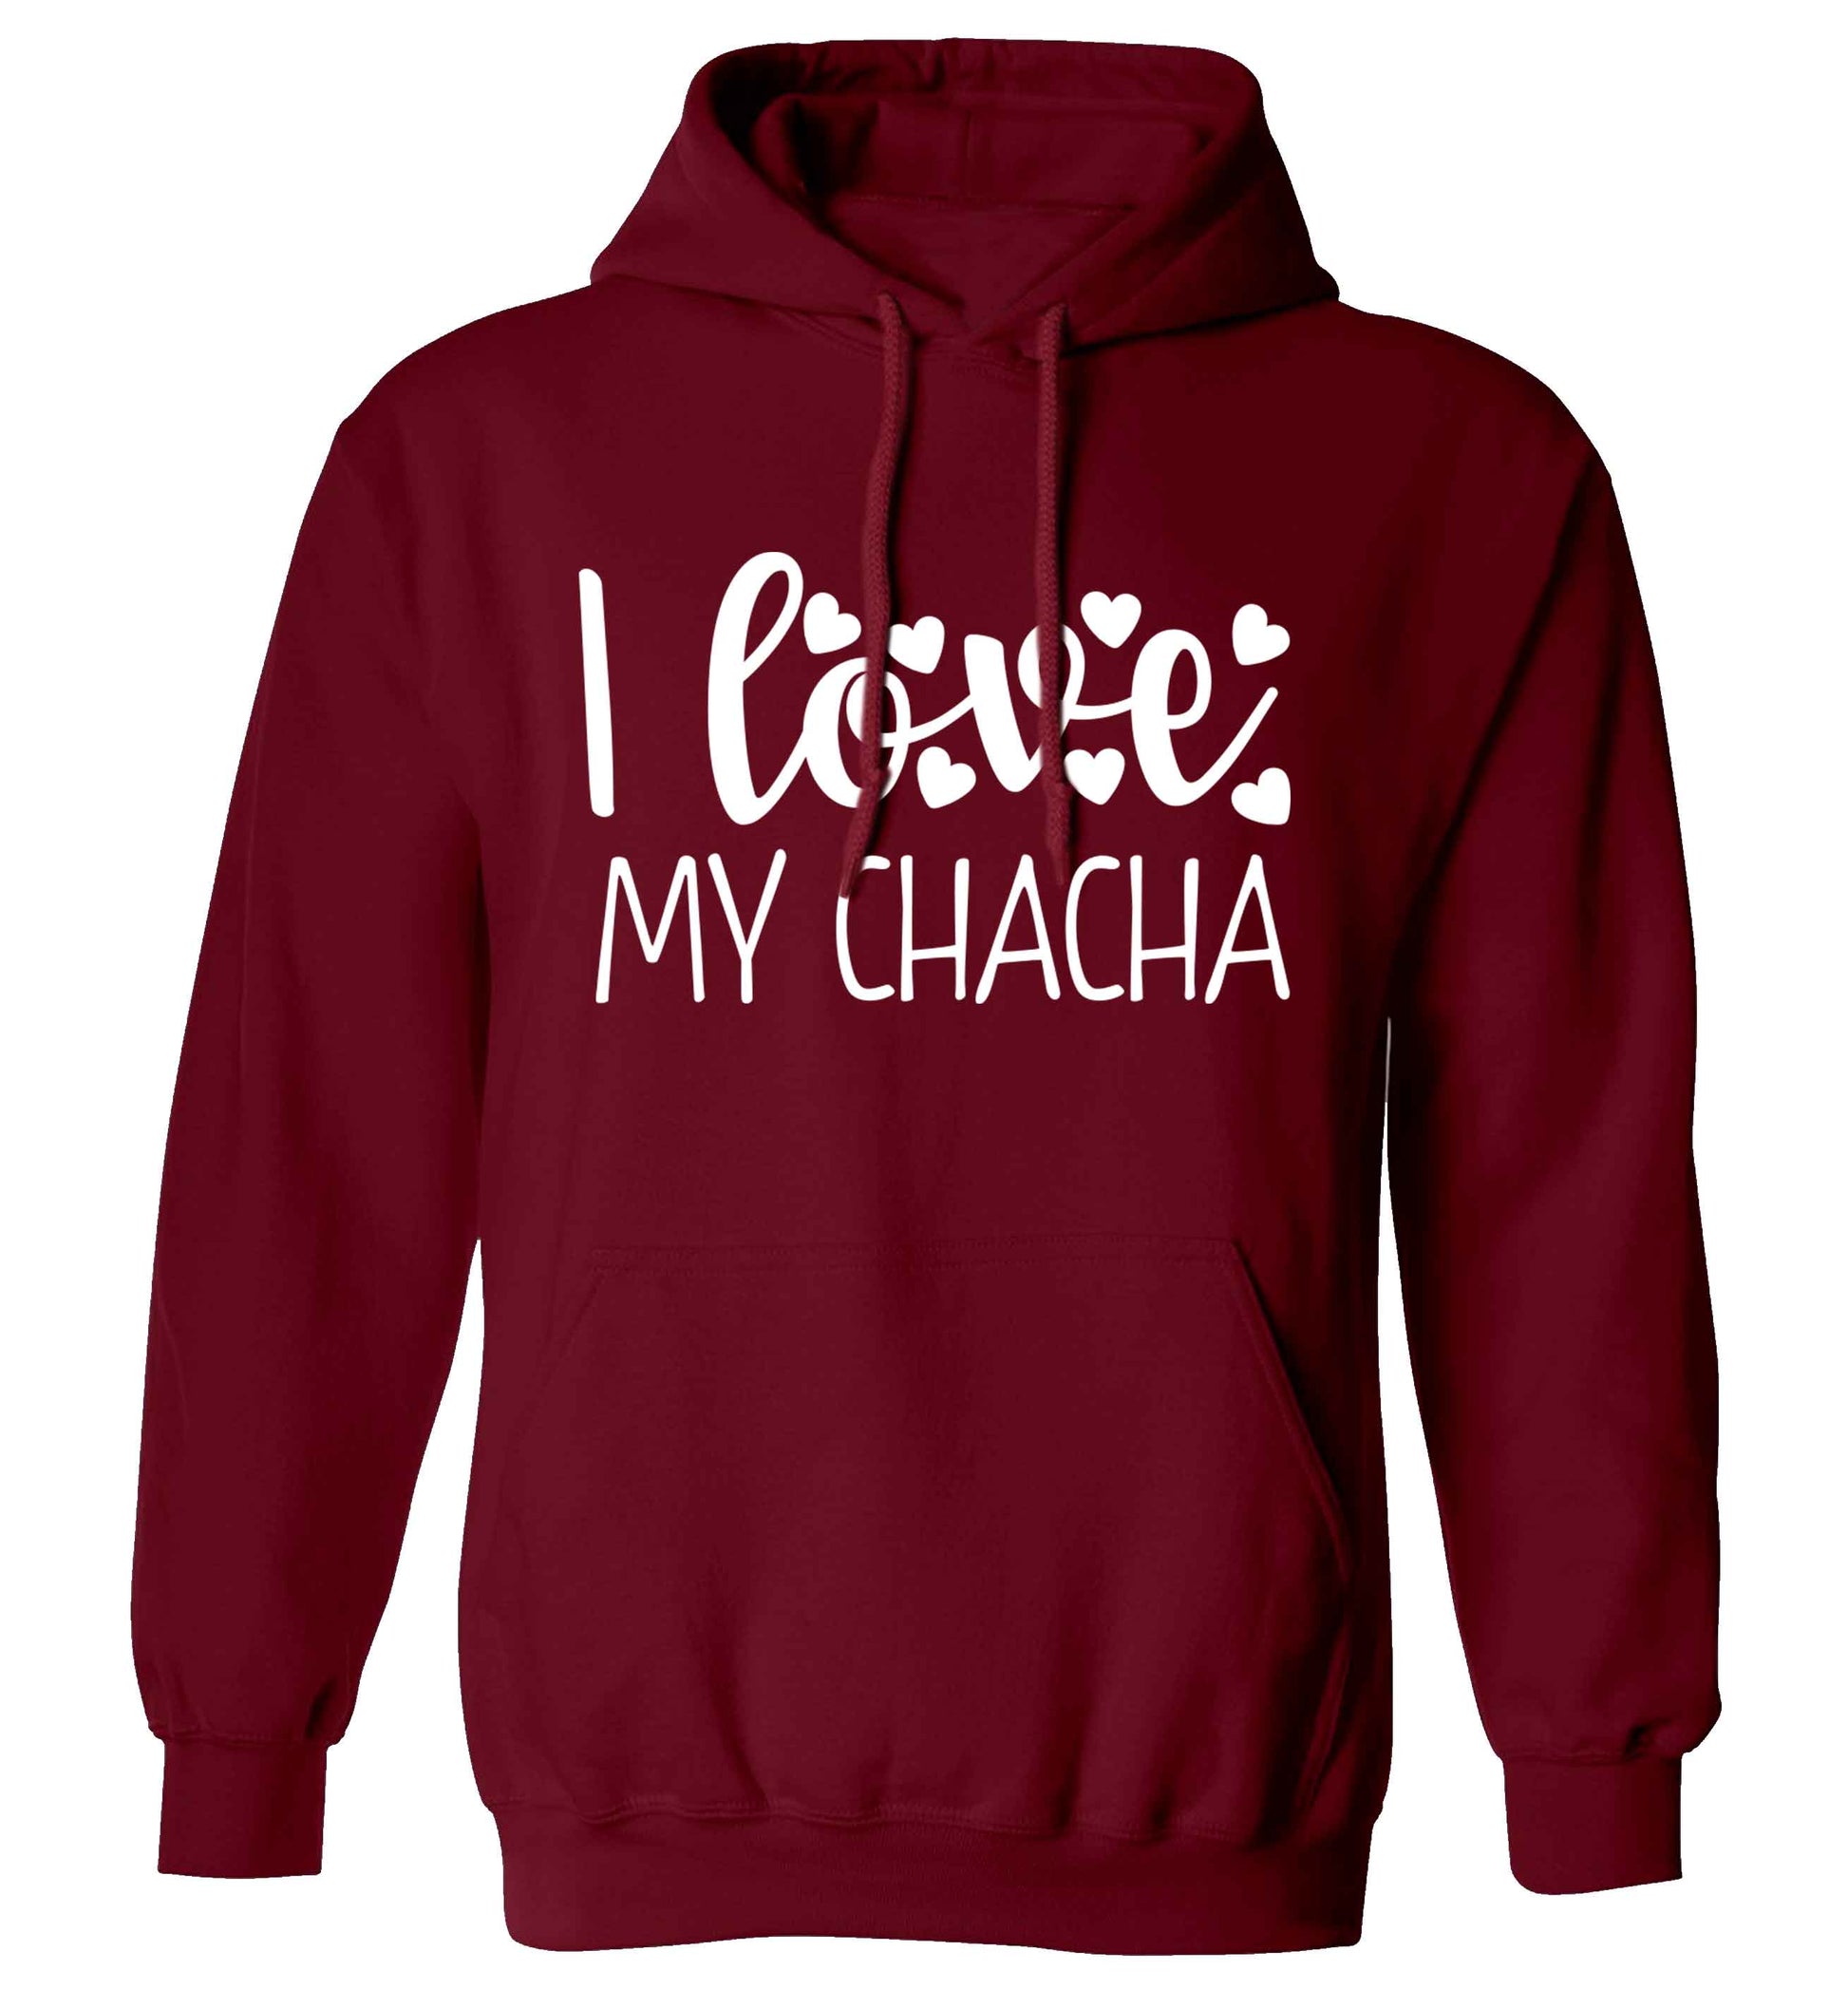 I love my chacha adults unisex maroon hoodie 2XL